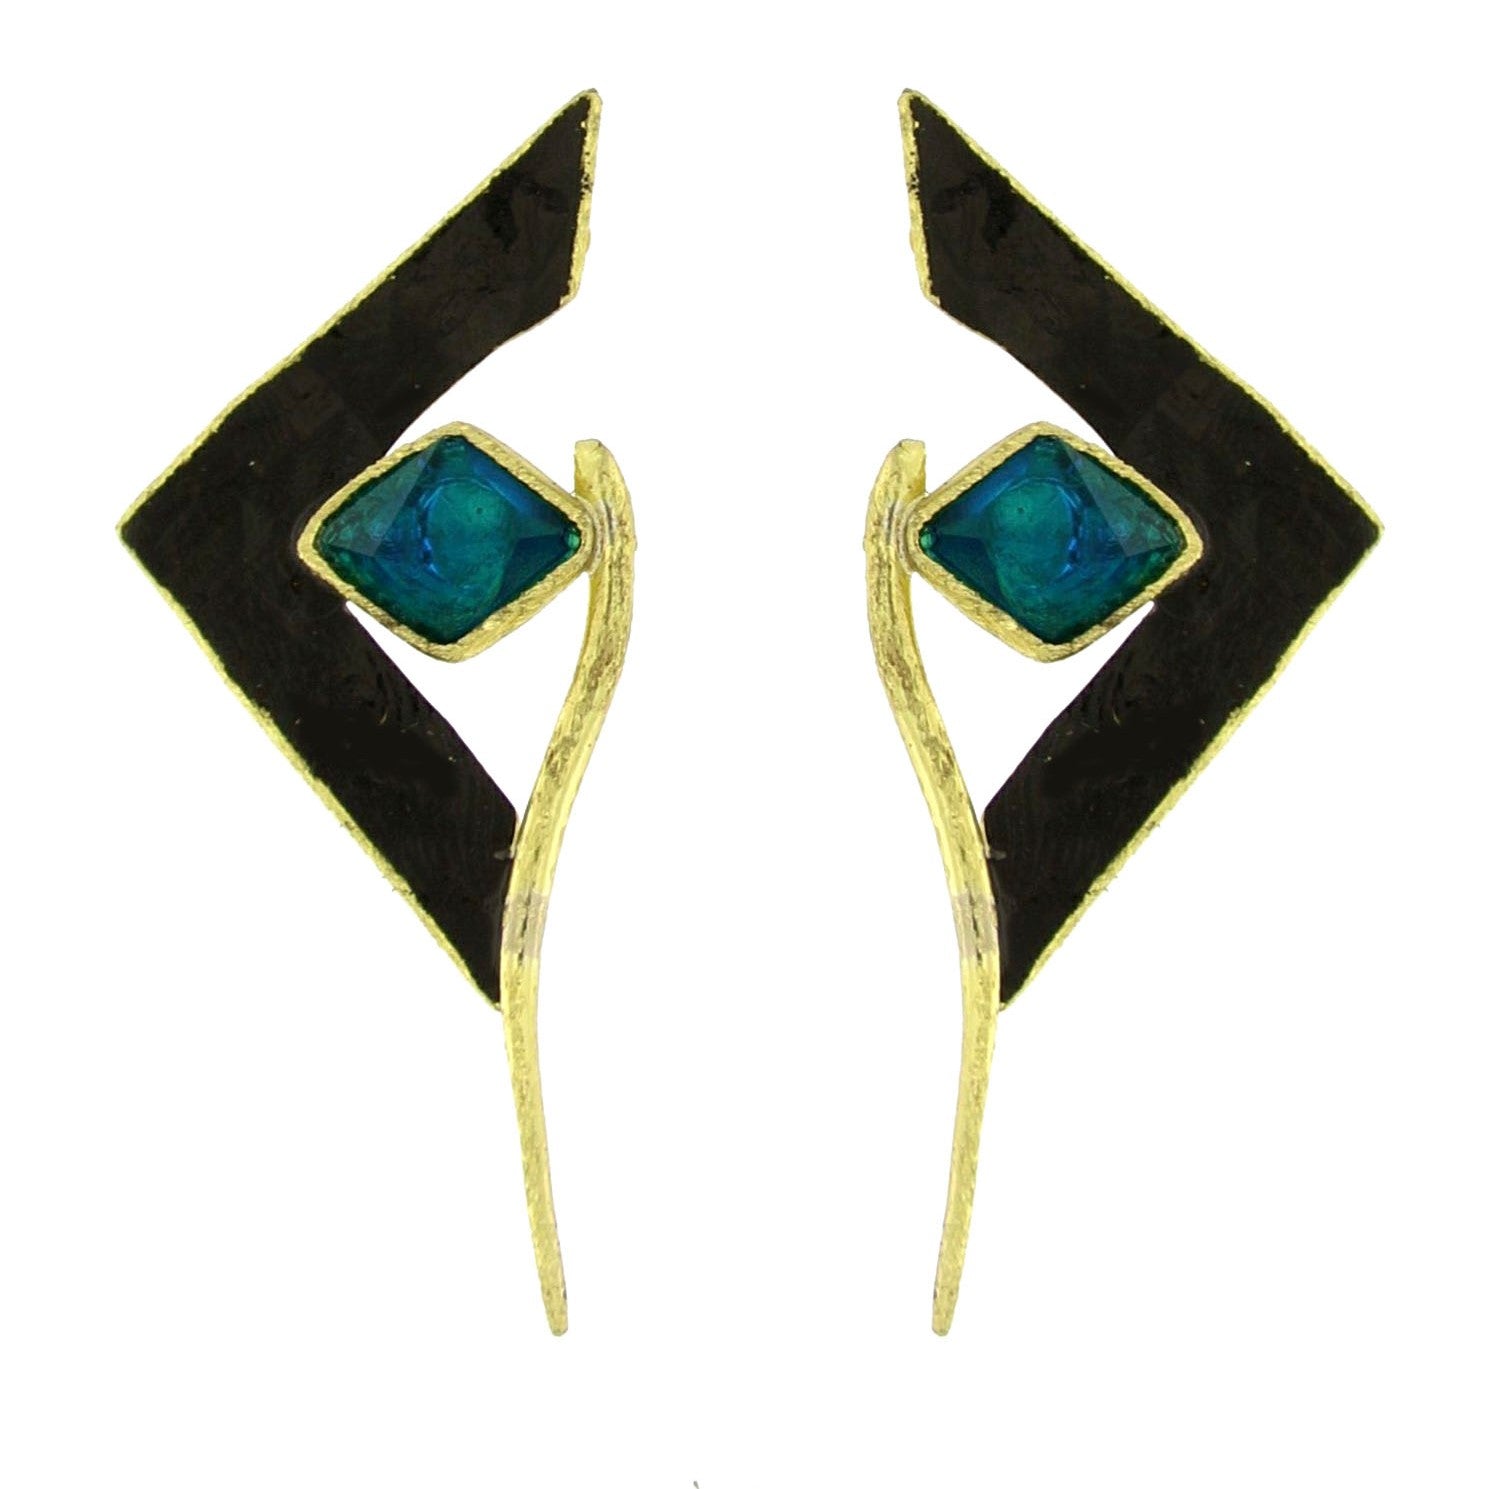 Mata Earrings - The Nancy Smillie Shop - Art, Jewellery & Designer Gifts Glasgow